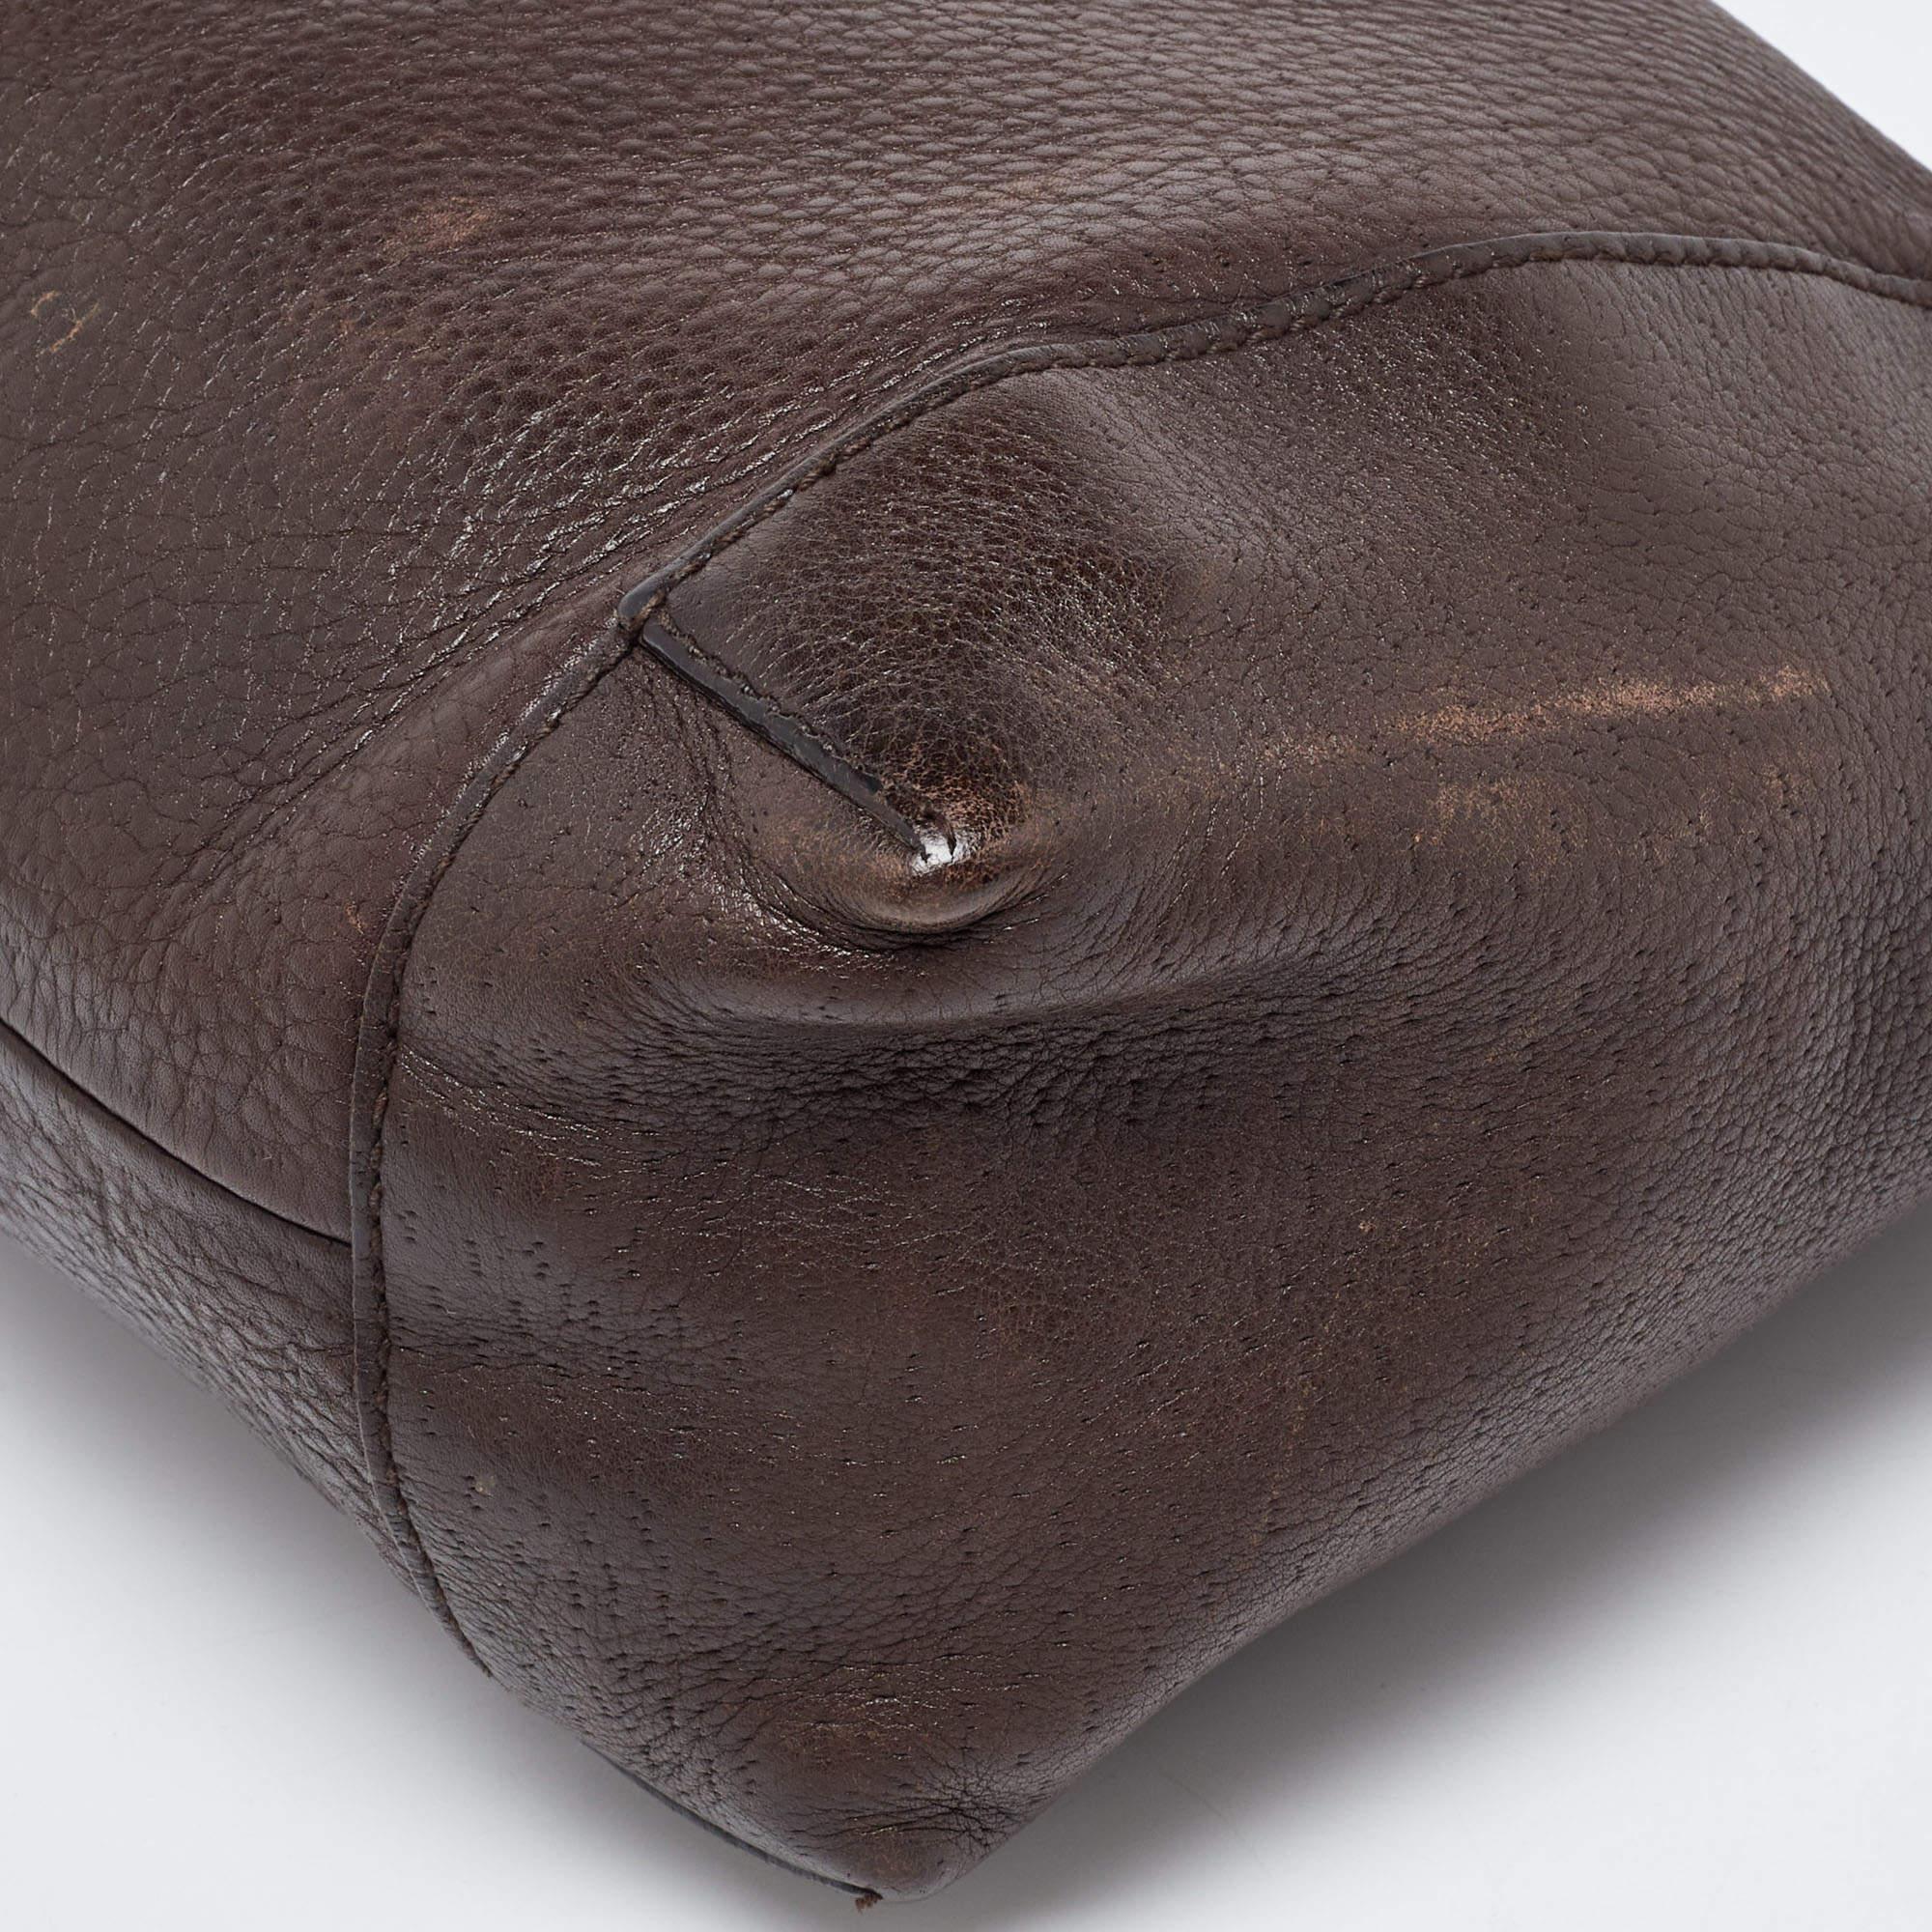 Gucci Dark Brown Leather Baguette Bag In Fair Condition For Sale In Dubai, Al Qouz 2